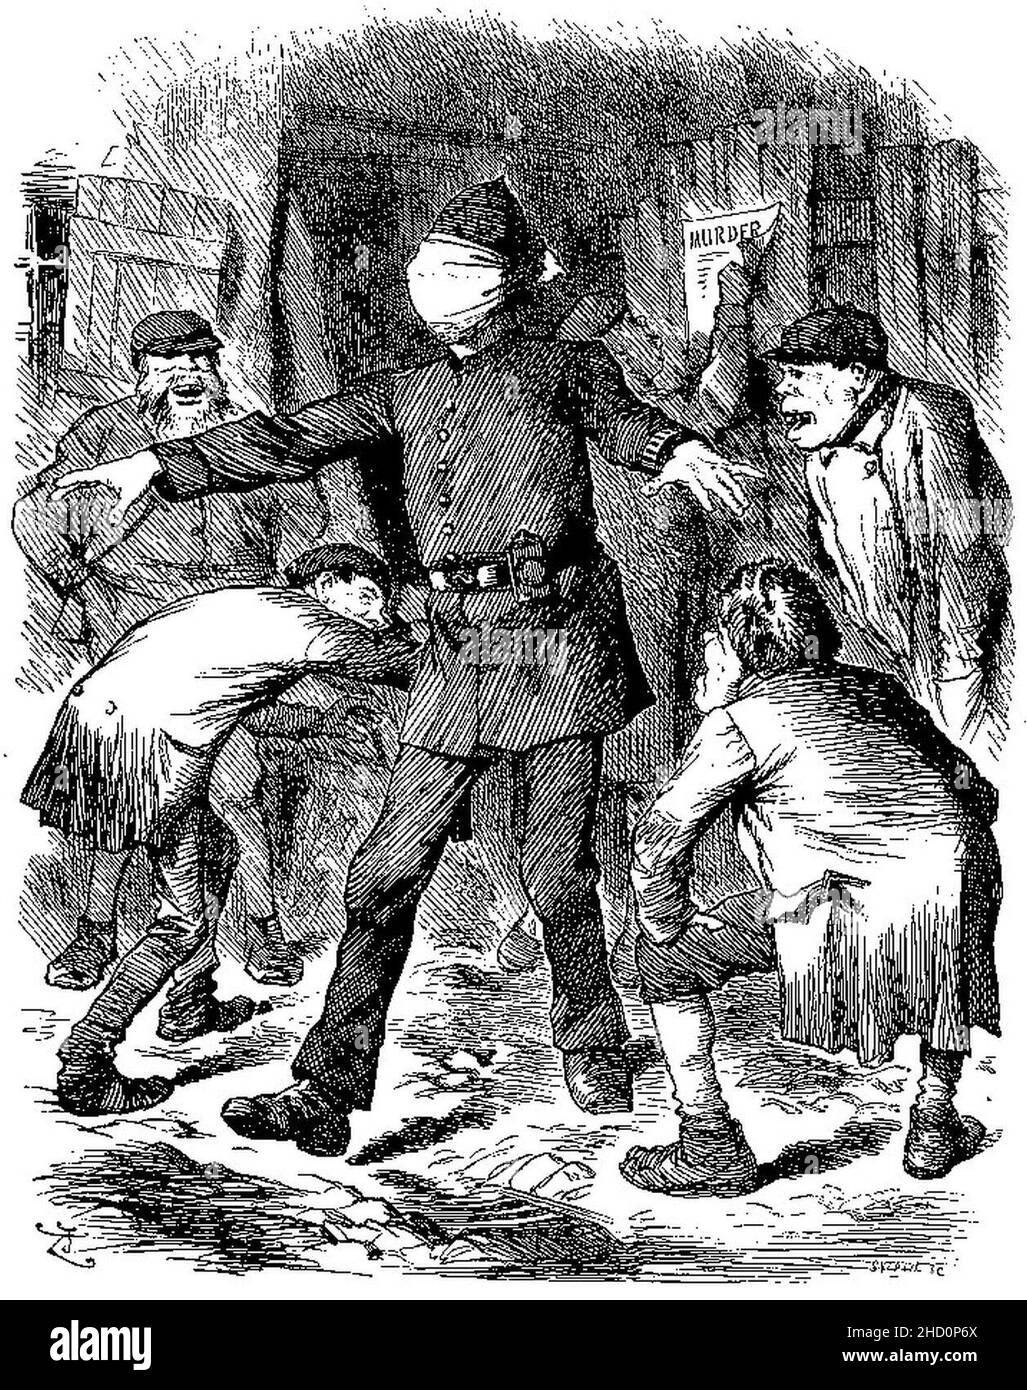 Ripper cartoon punch. Stock Photo